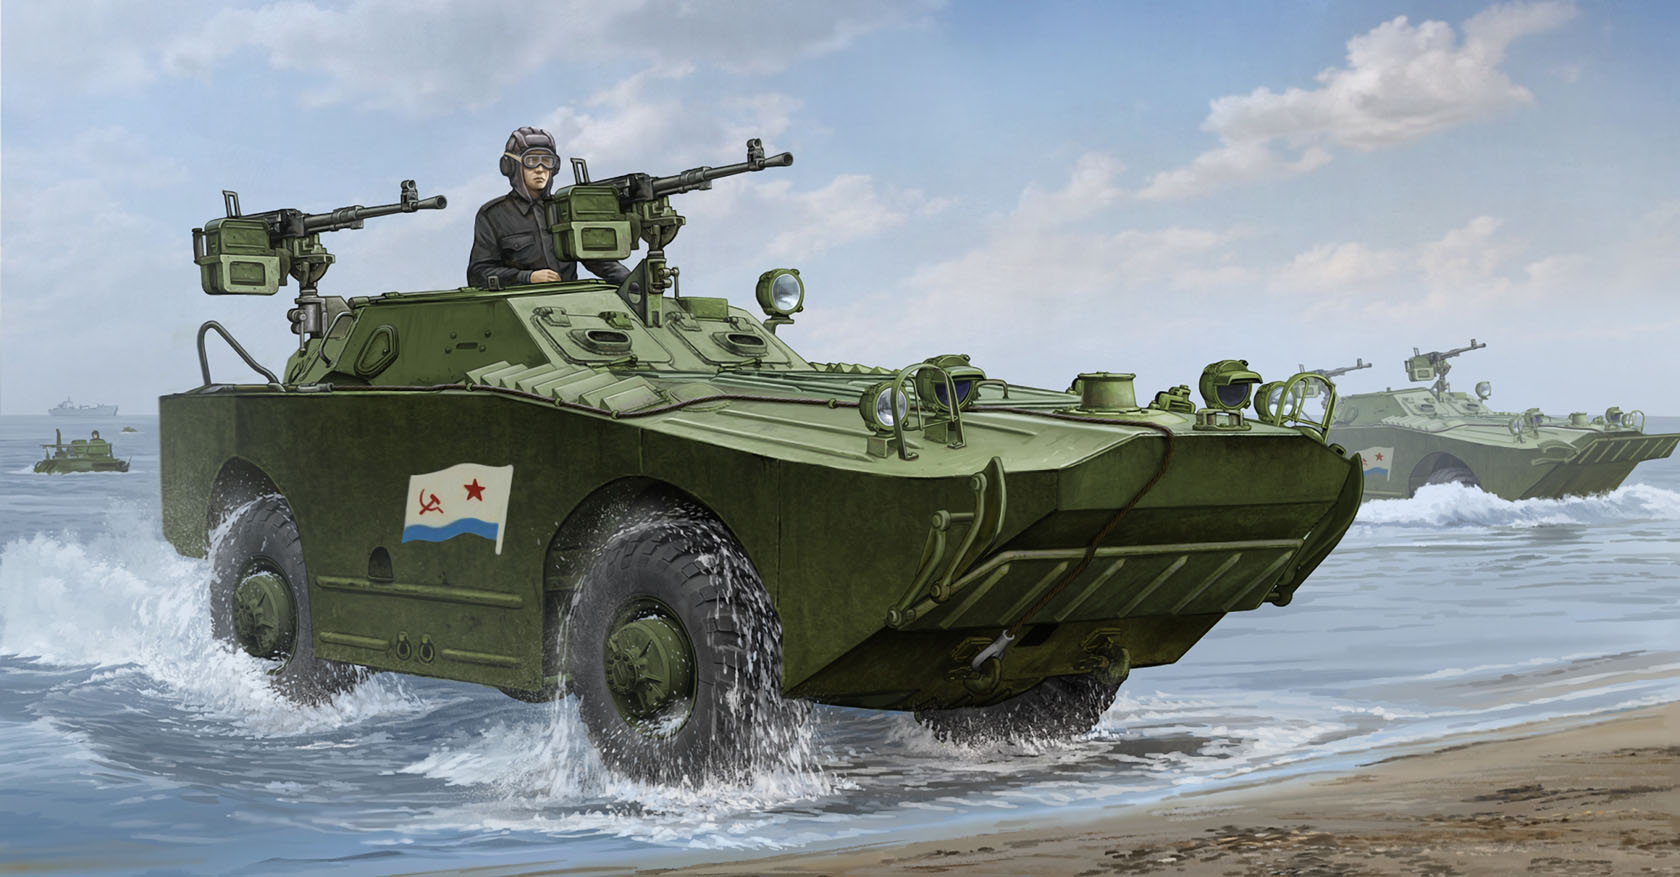 General 1680x877 tank army military sea military vehicle artwork men soldier sky clouds gun goggles water flag uniform